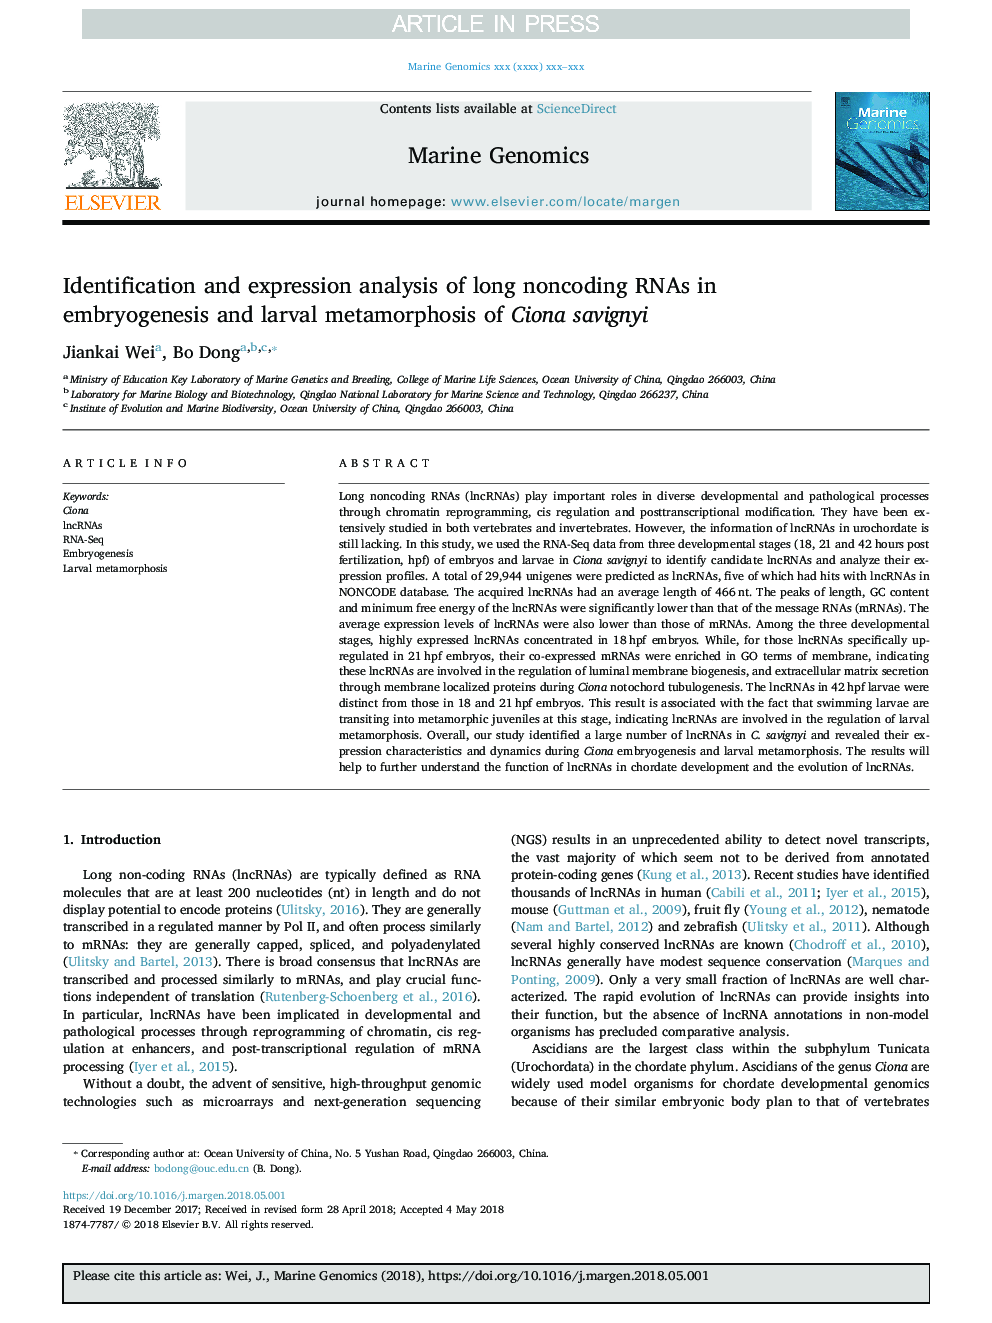 Identification and expression analysis of long noncoding RNAs in embryogenesis and larval metamorphosis of Ciona savignyi